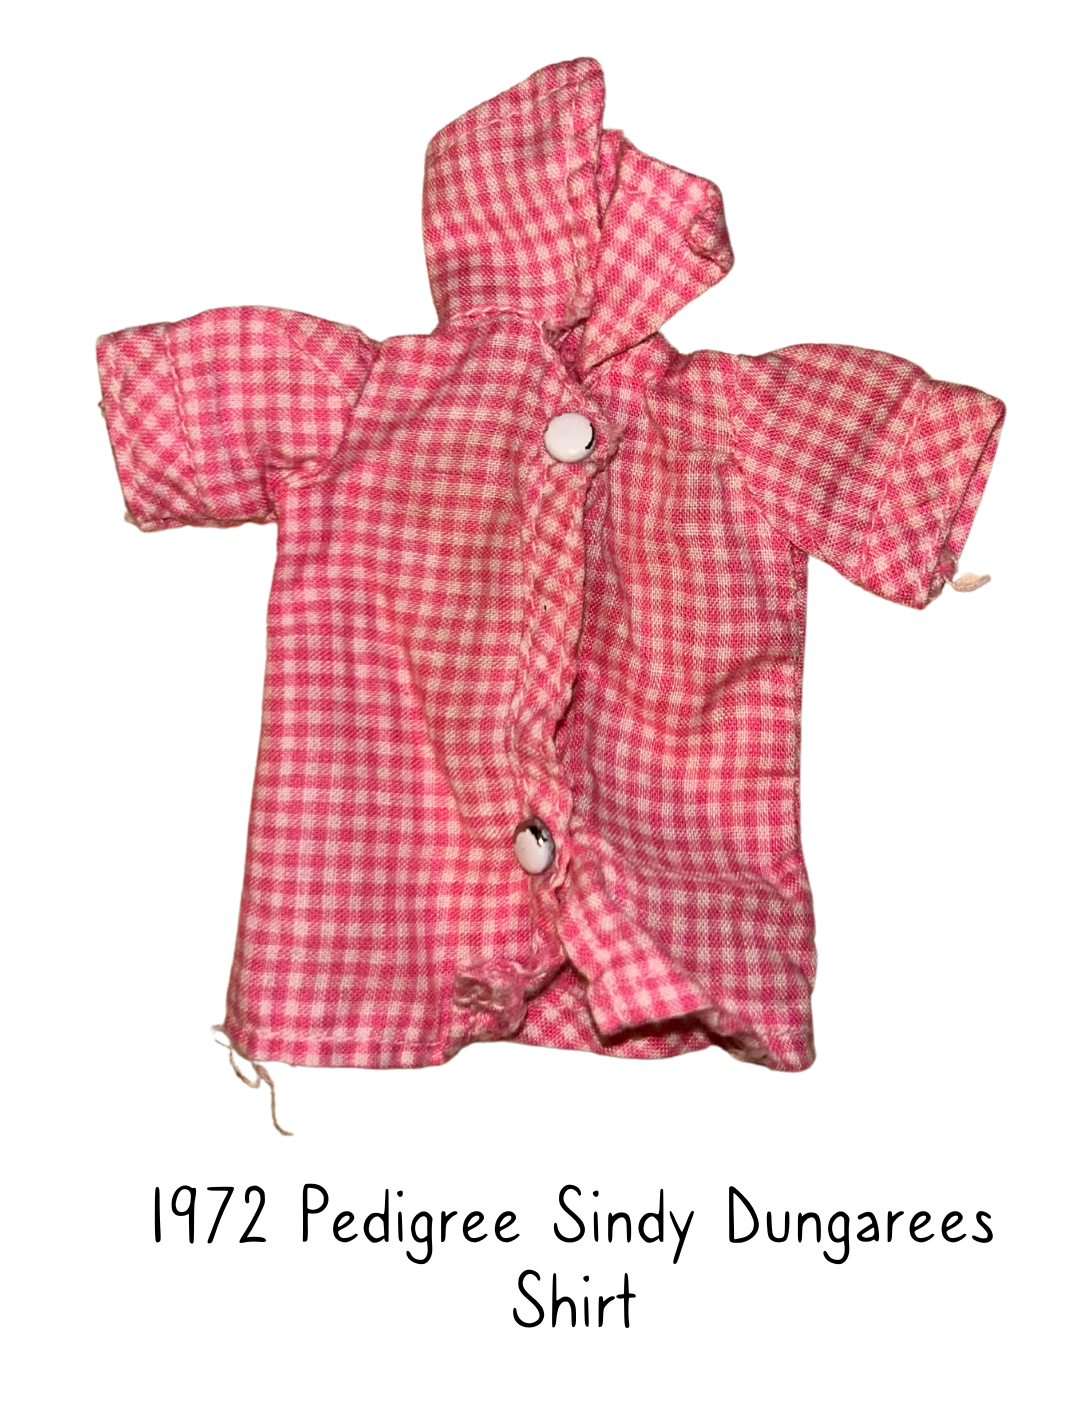 1972 Pedigree Sindy Fashion Doll Dungarees Check Shirt